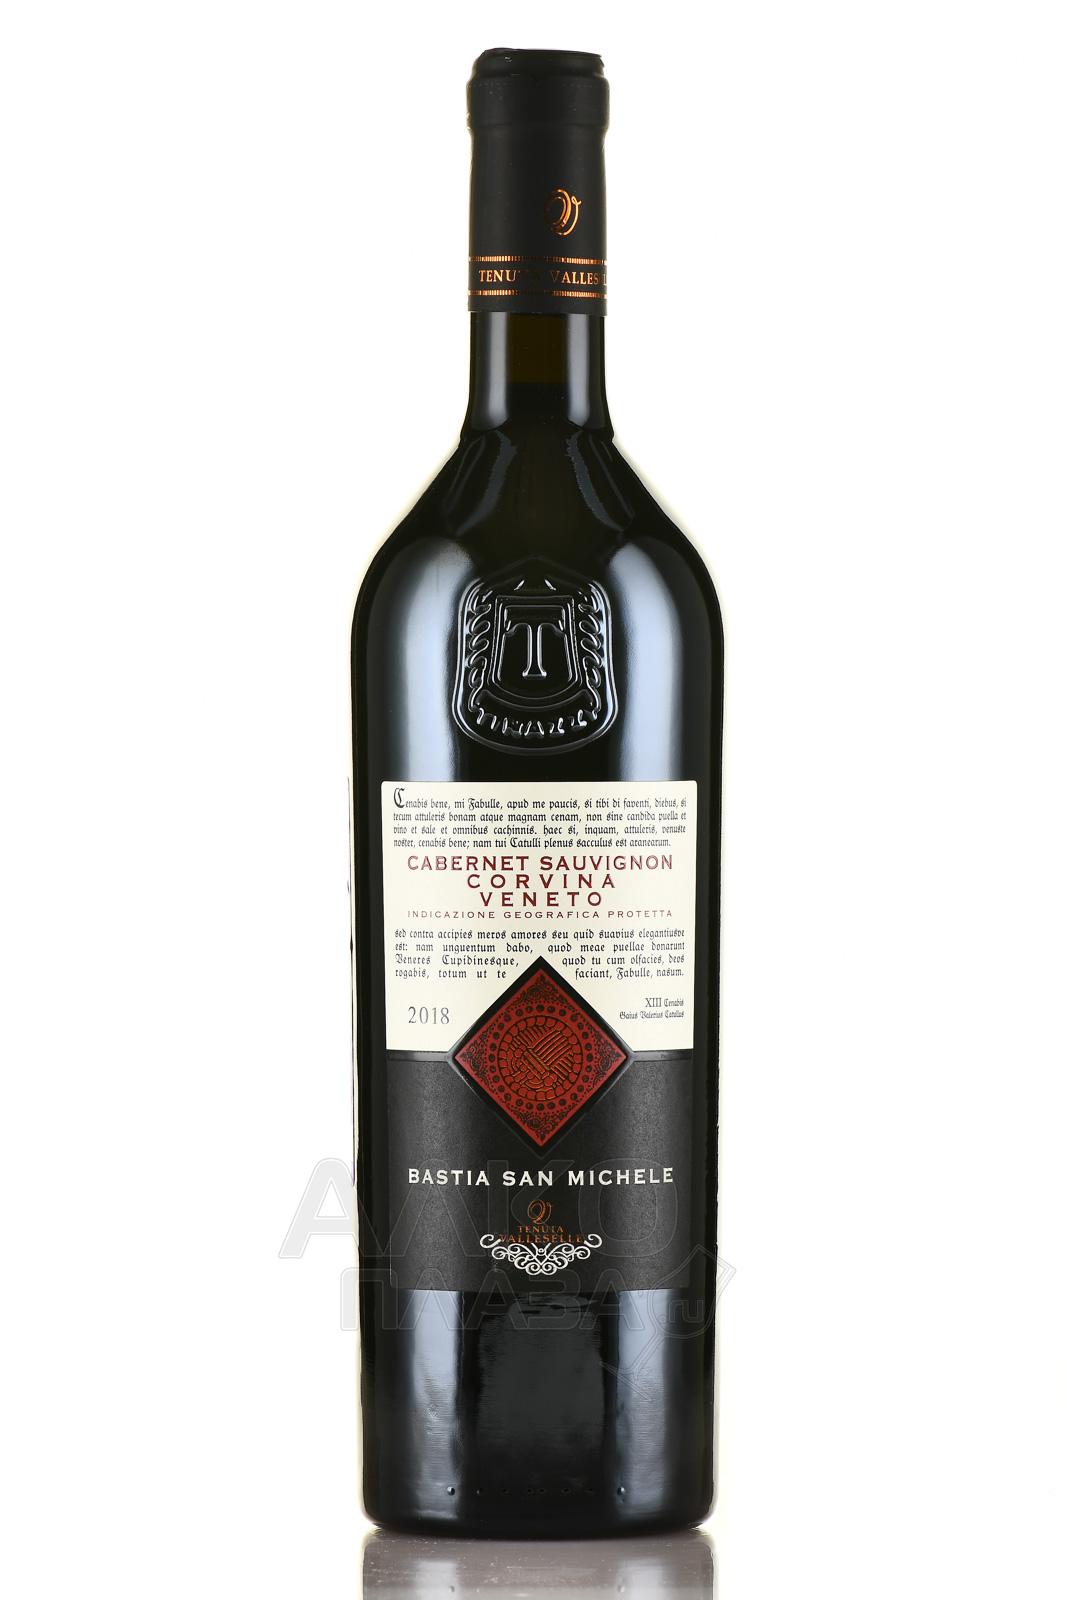 вино Тинацци Тенута Валлеселле Бастия Сан Микеле Каберне Совиньон Корвина 0.75 л красное сухое 